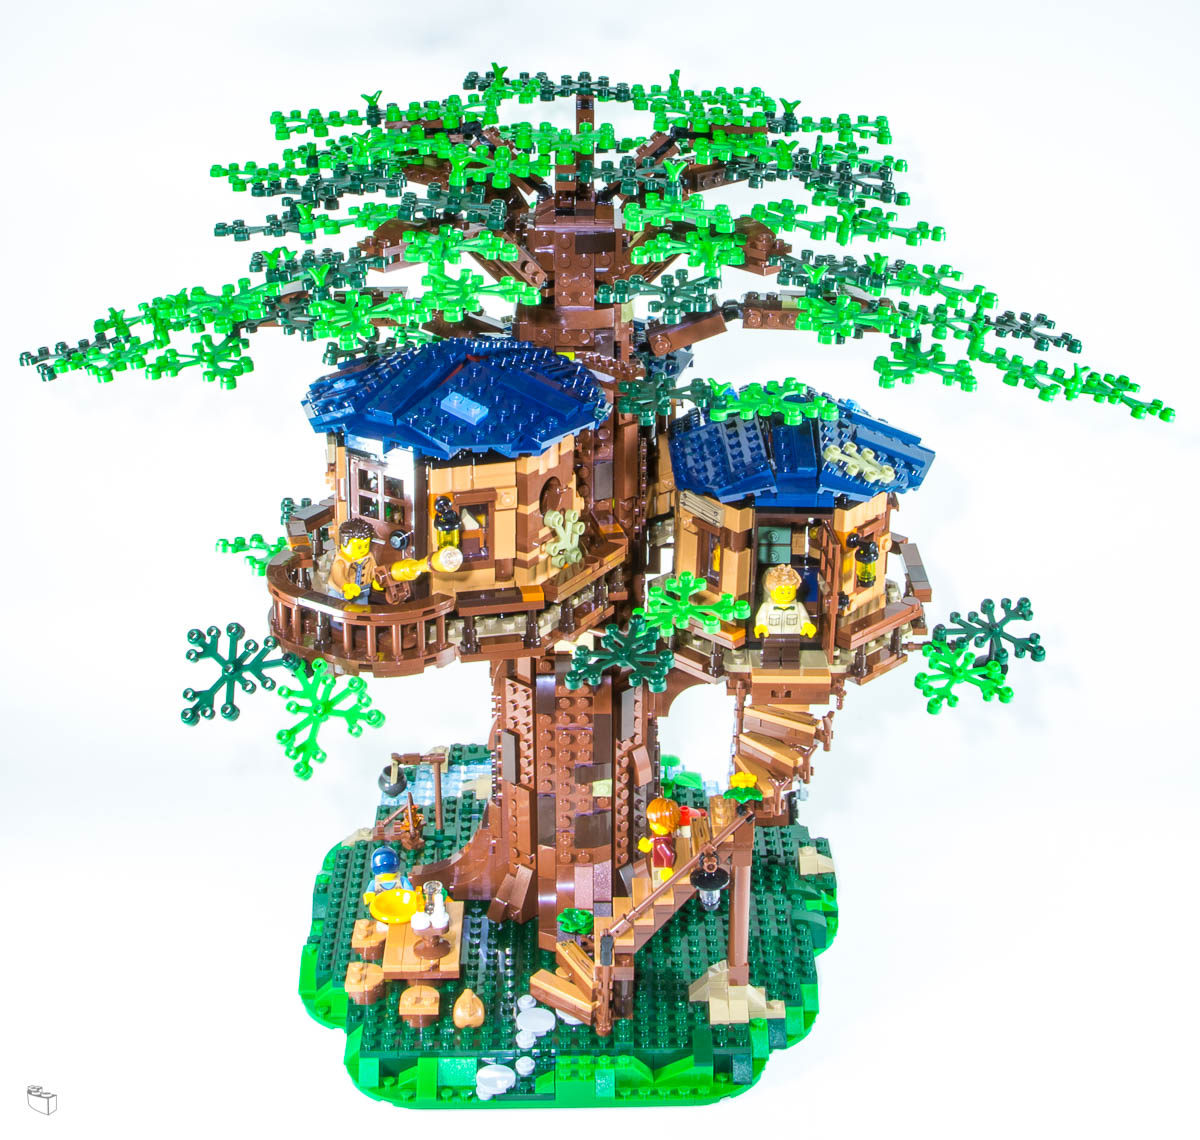 lego tree house ideas